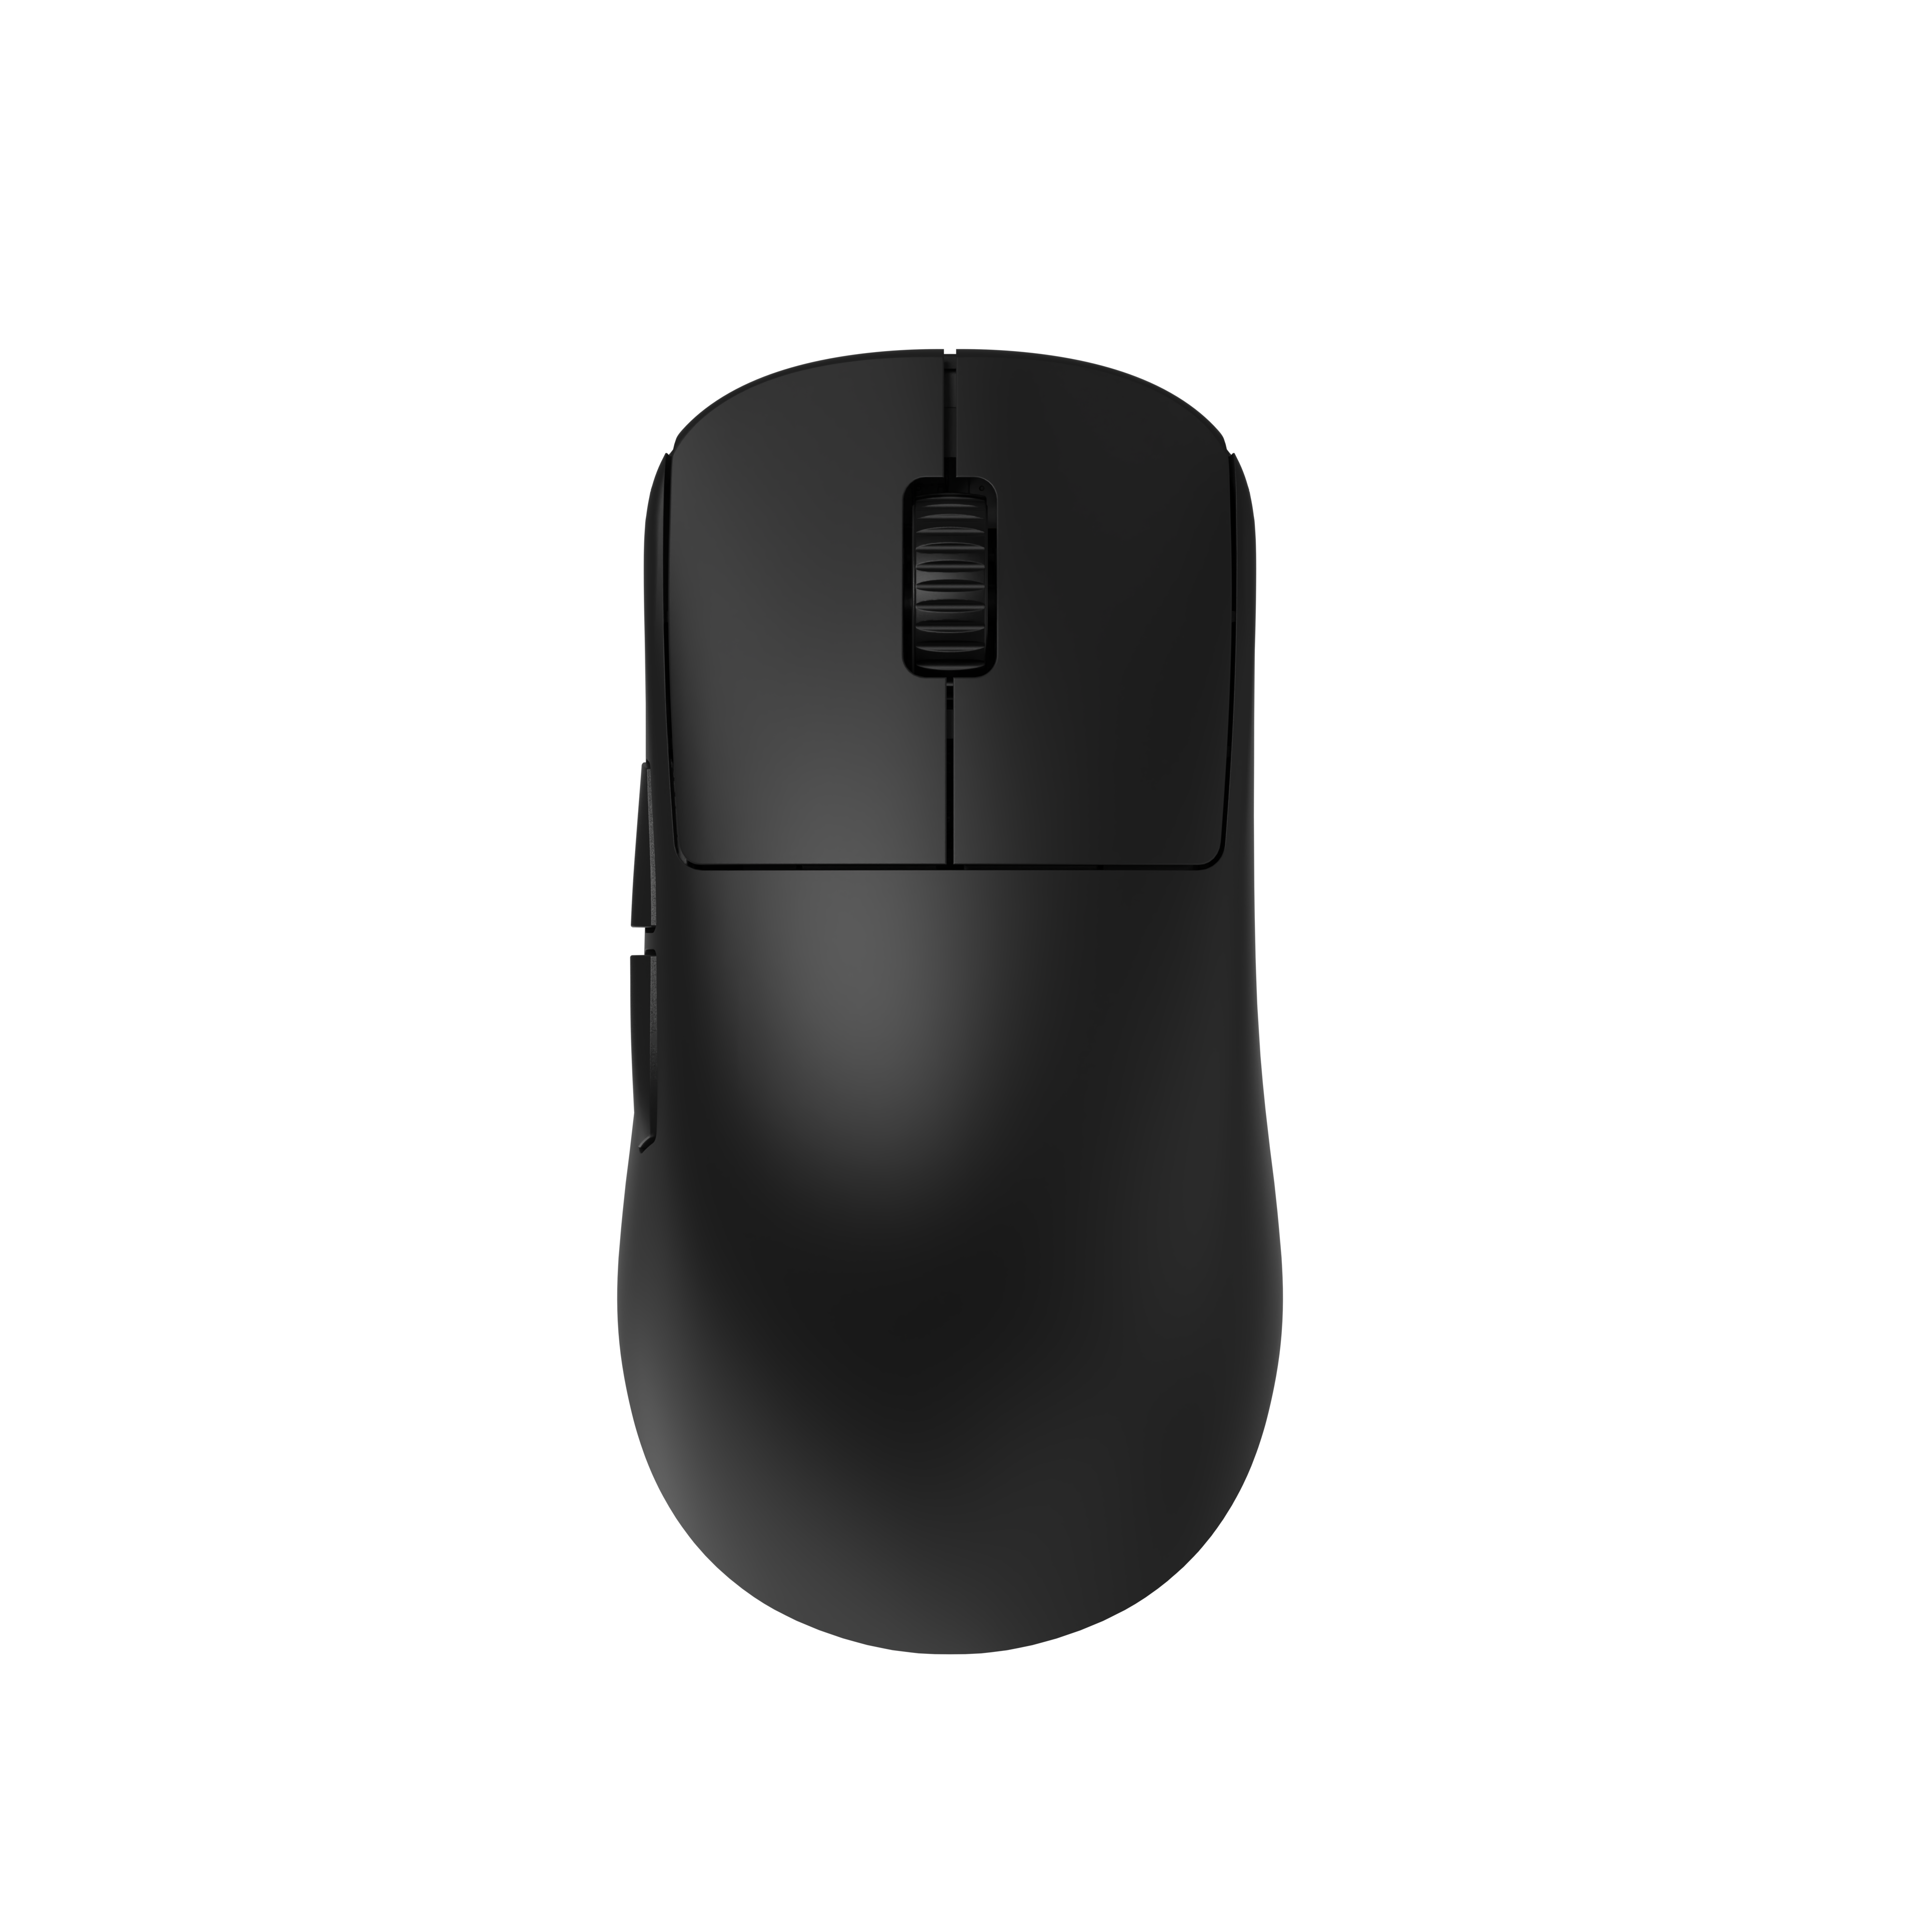 endgame-gear - OP1we Gaming Mouse - Black